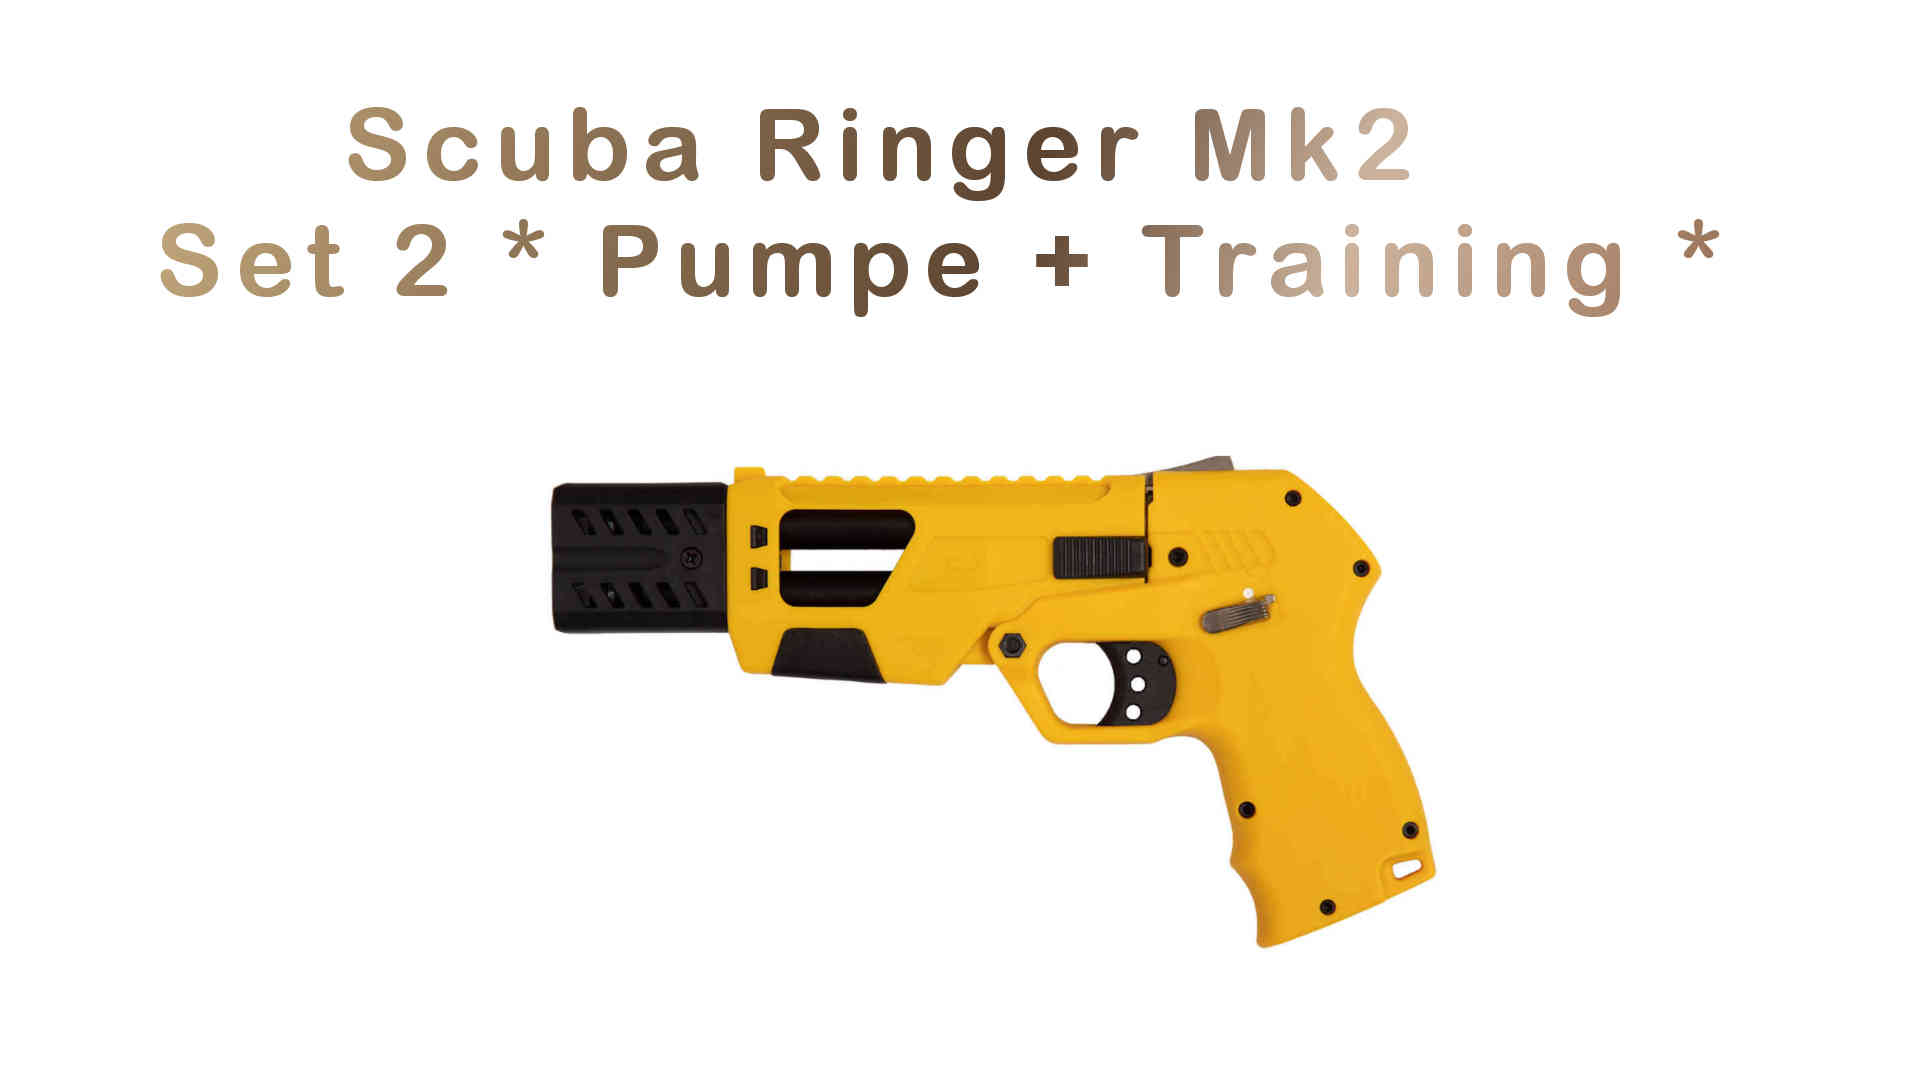 Scuba Ringer MK2 - Set 2 - Pumpe + Training